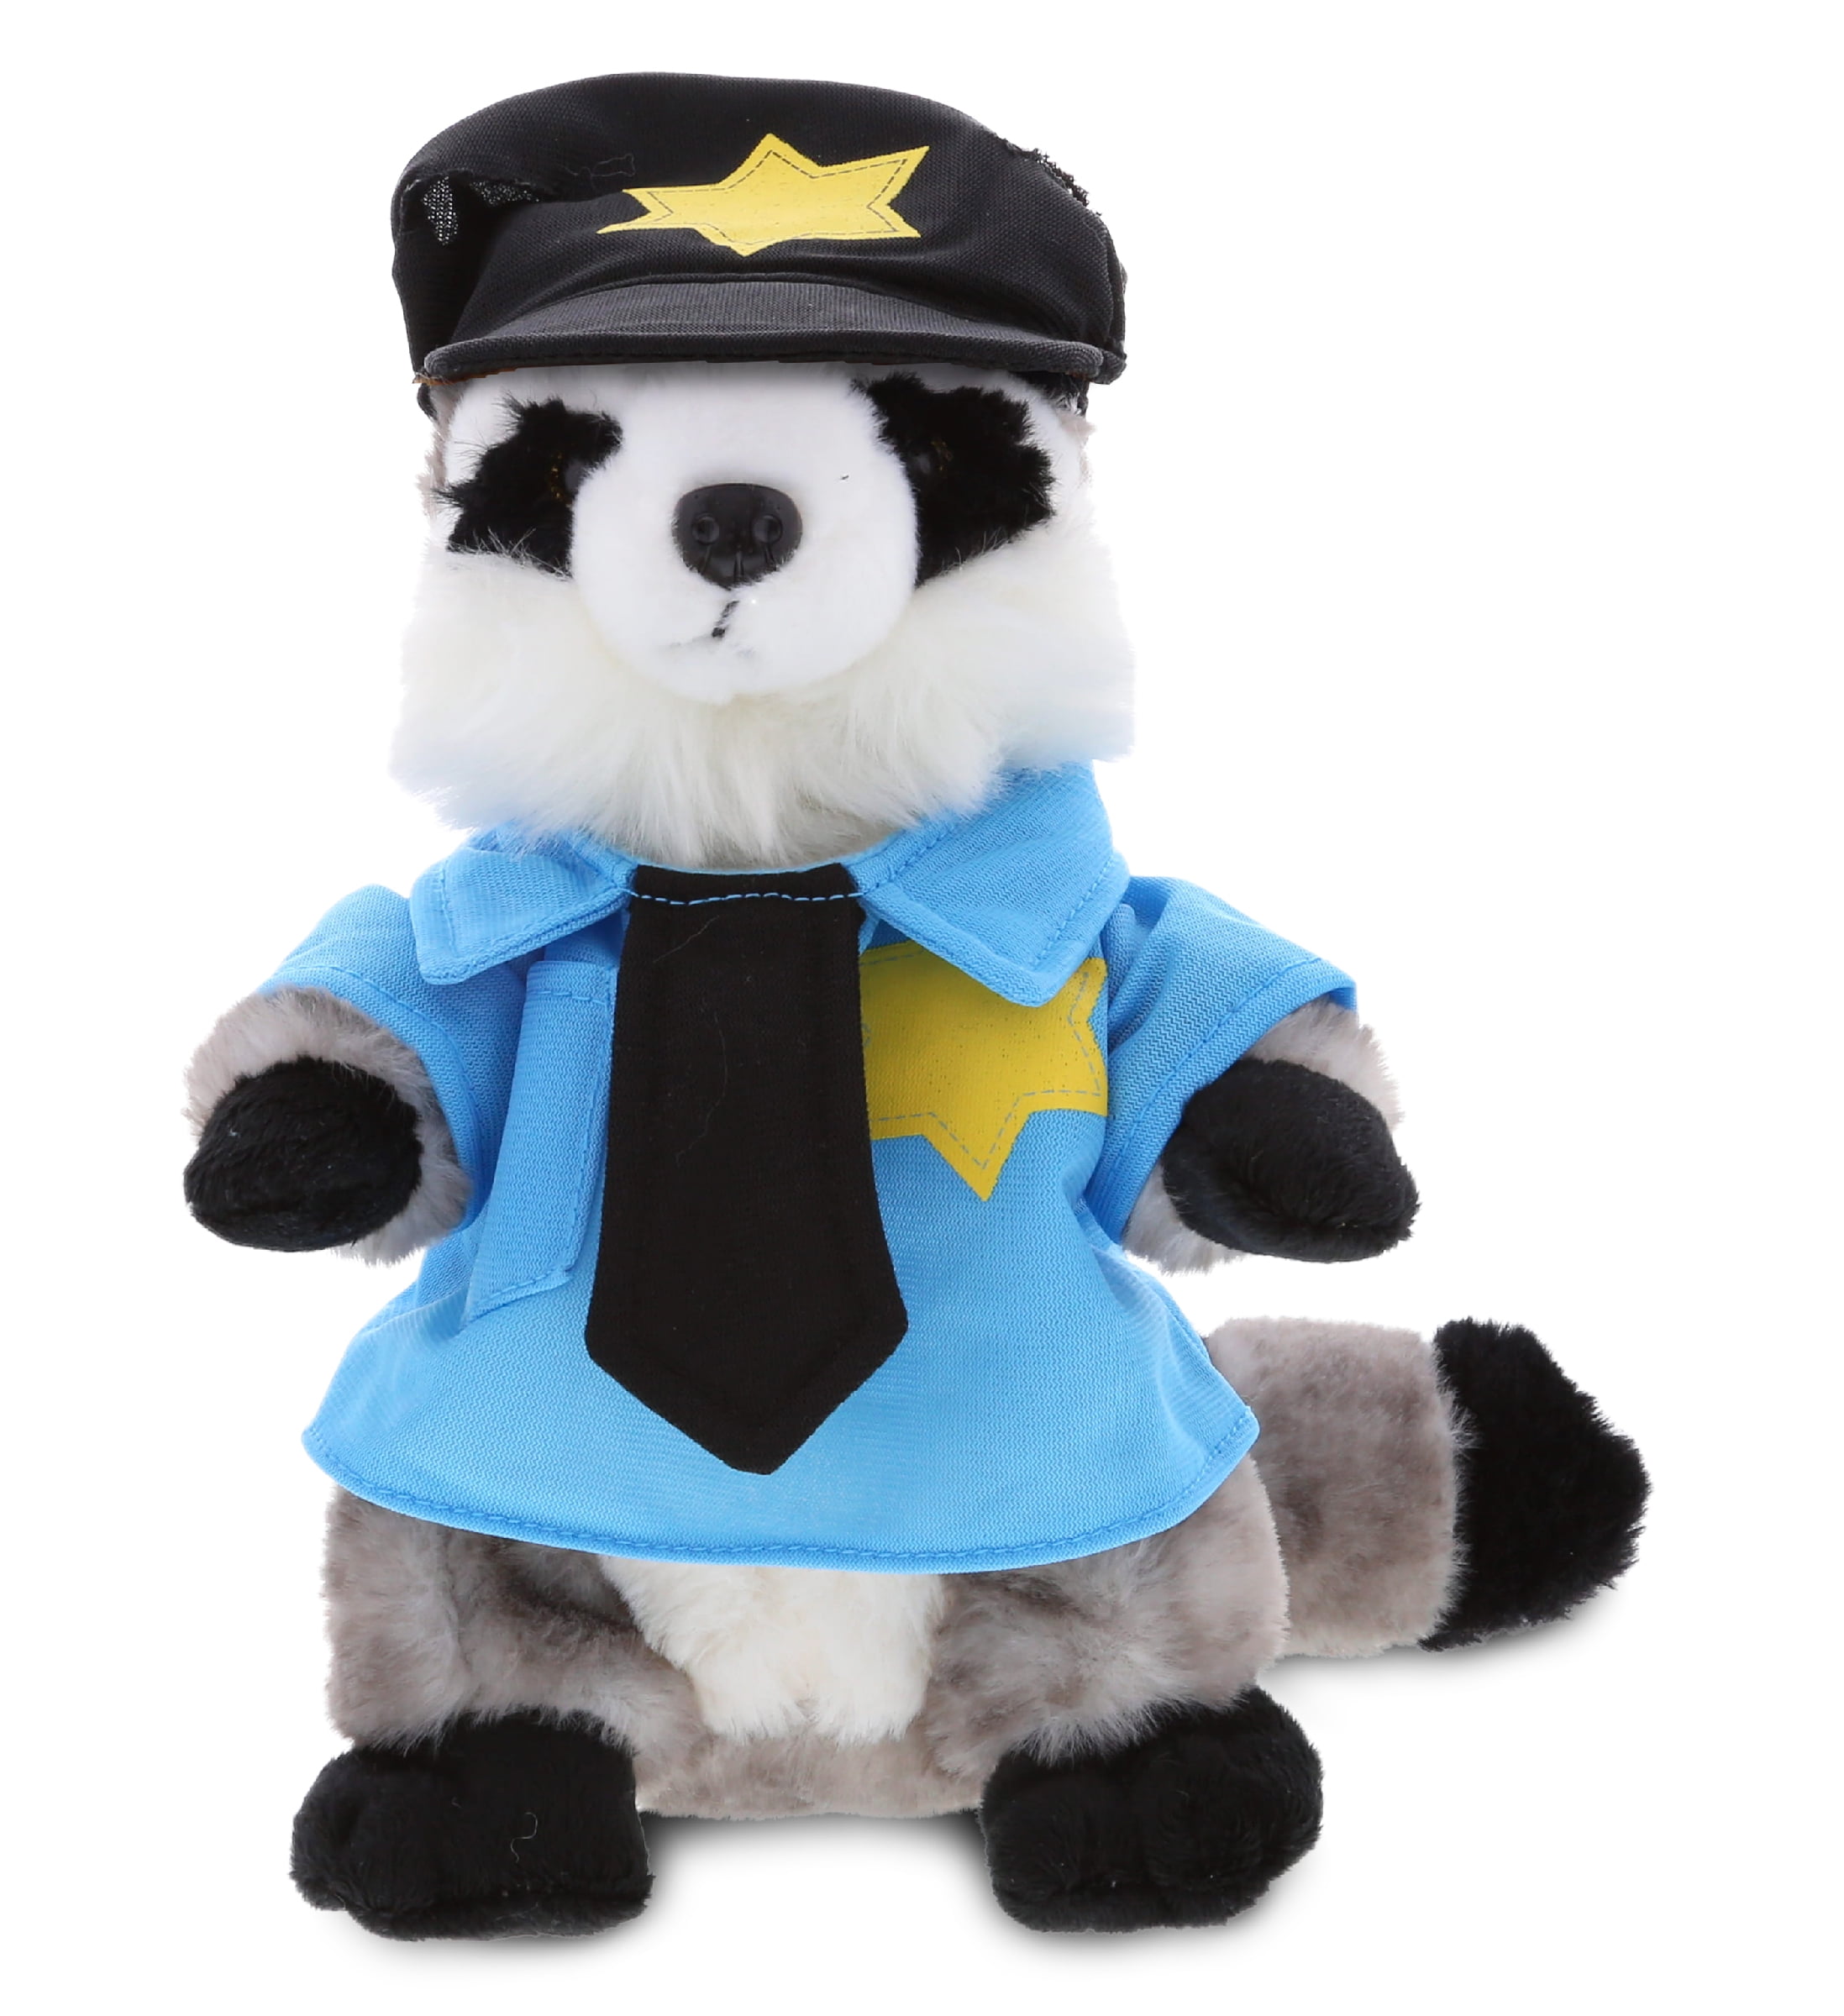 DolliBu Sea Turtle Police Officer Plush Toy – Plush Buddies Sea Turtle Cop Stuffed  Animal Dress Up with Cute Cop Uniform & Cap Outfit – 7″ Inches - DolliBu